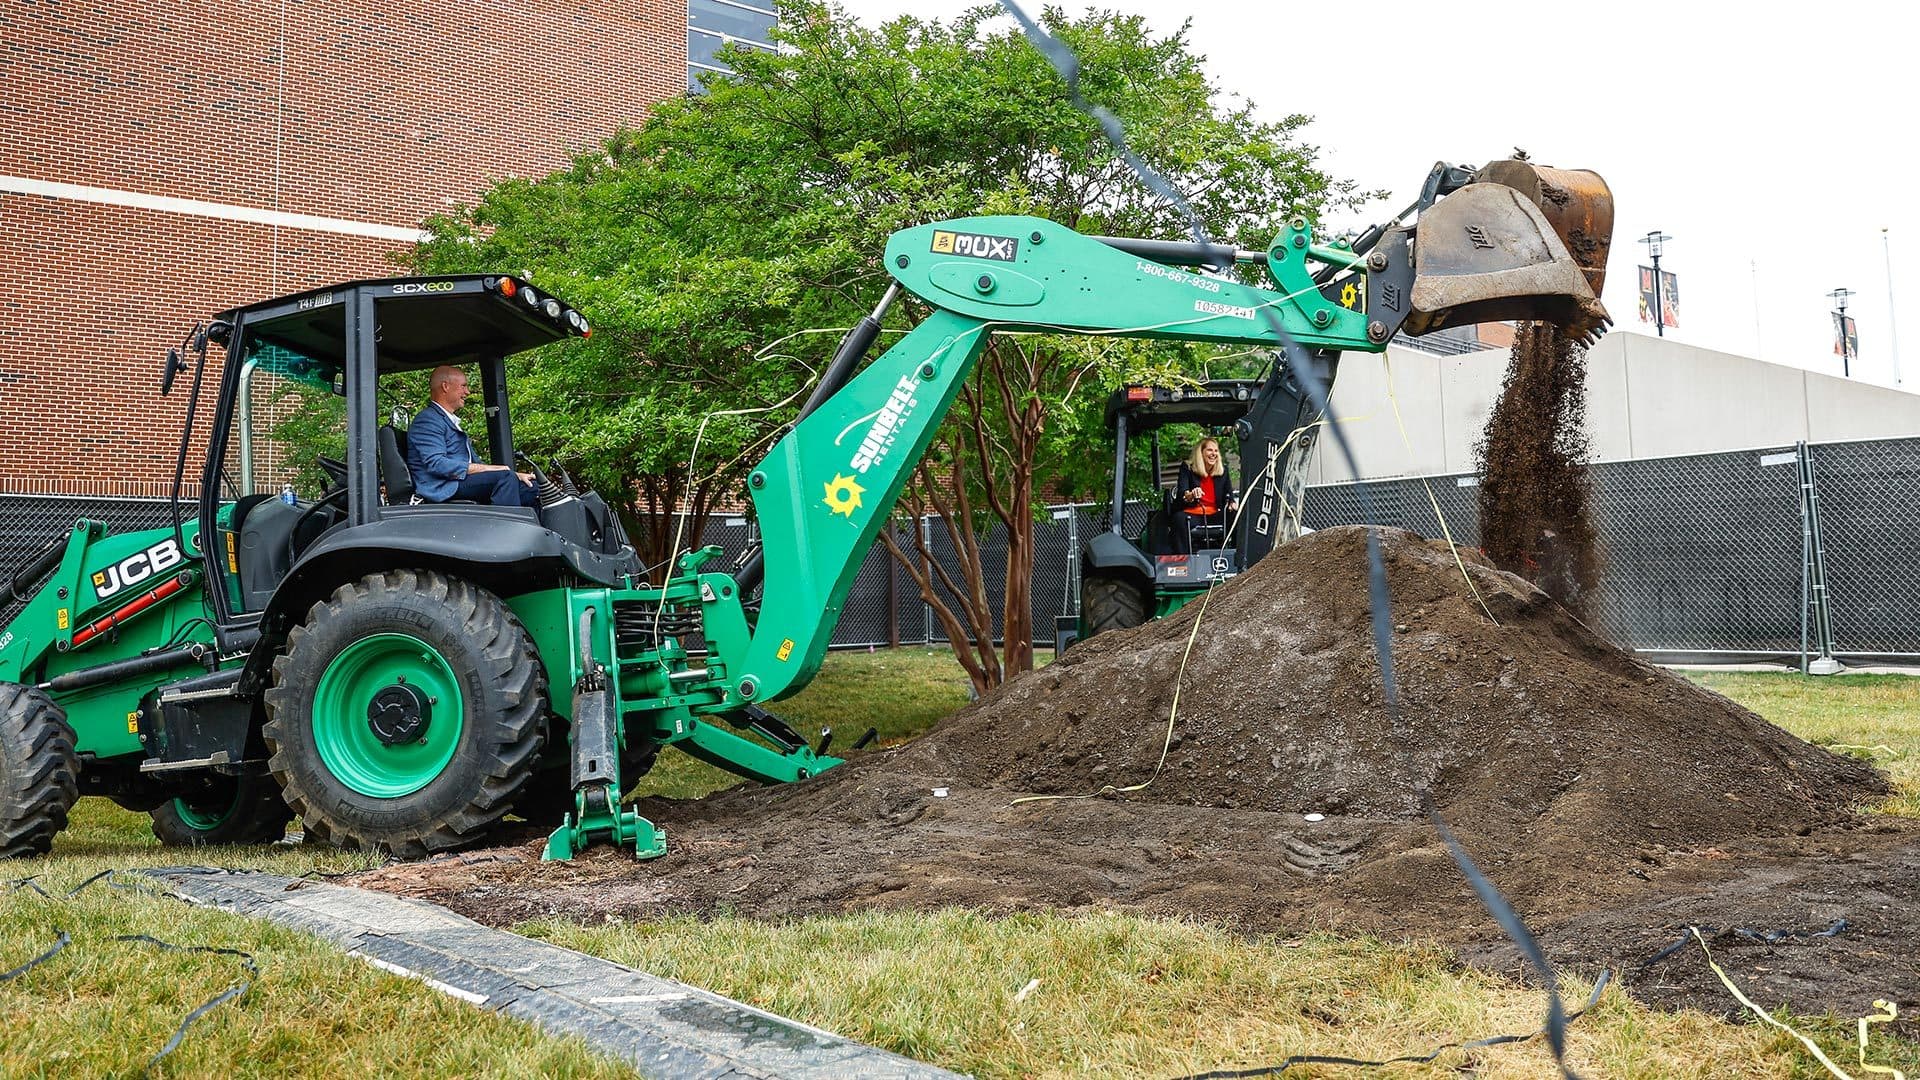 Kevin Willard and Brenda Frese scoop dirt with excavators